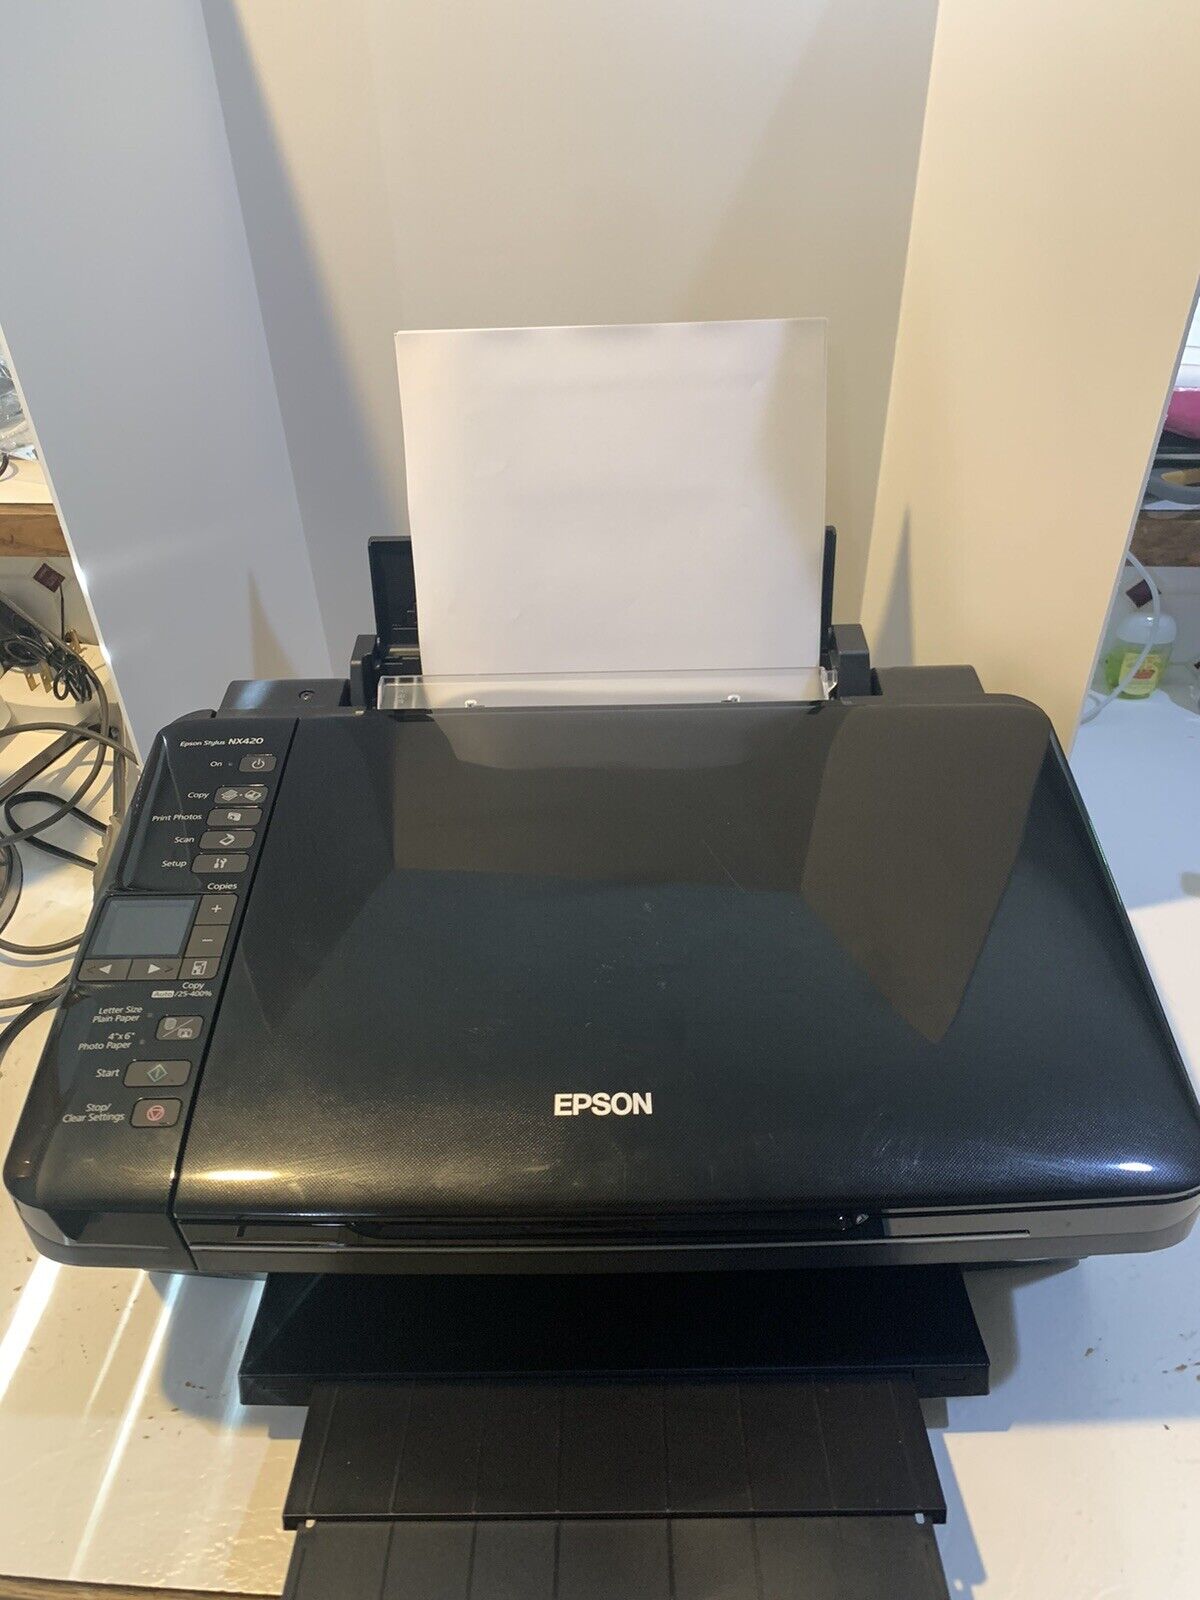 Epson Stylus Nx420 All In One Printer Inkjet Print Copy Scan Wifi Model C353a For Sale 8172